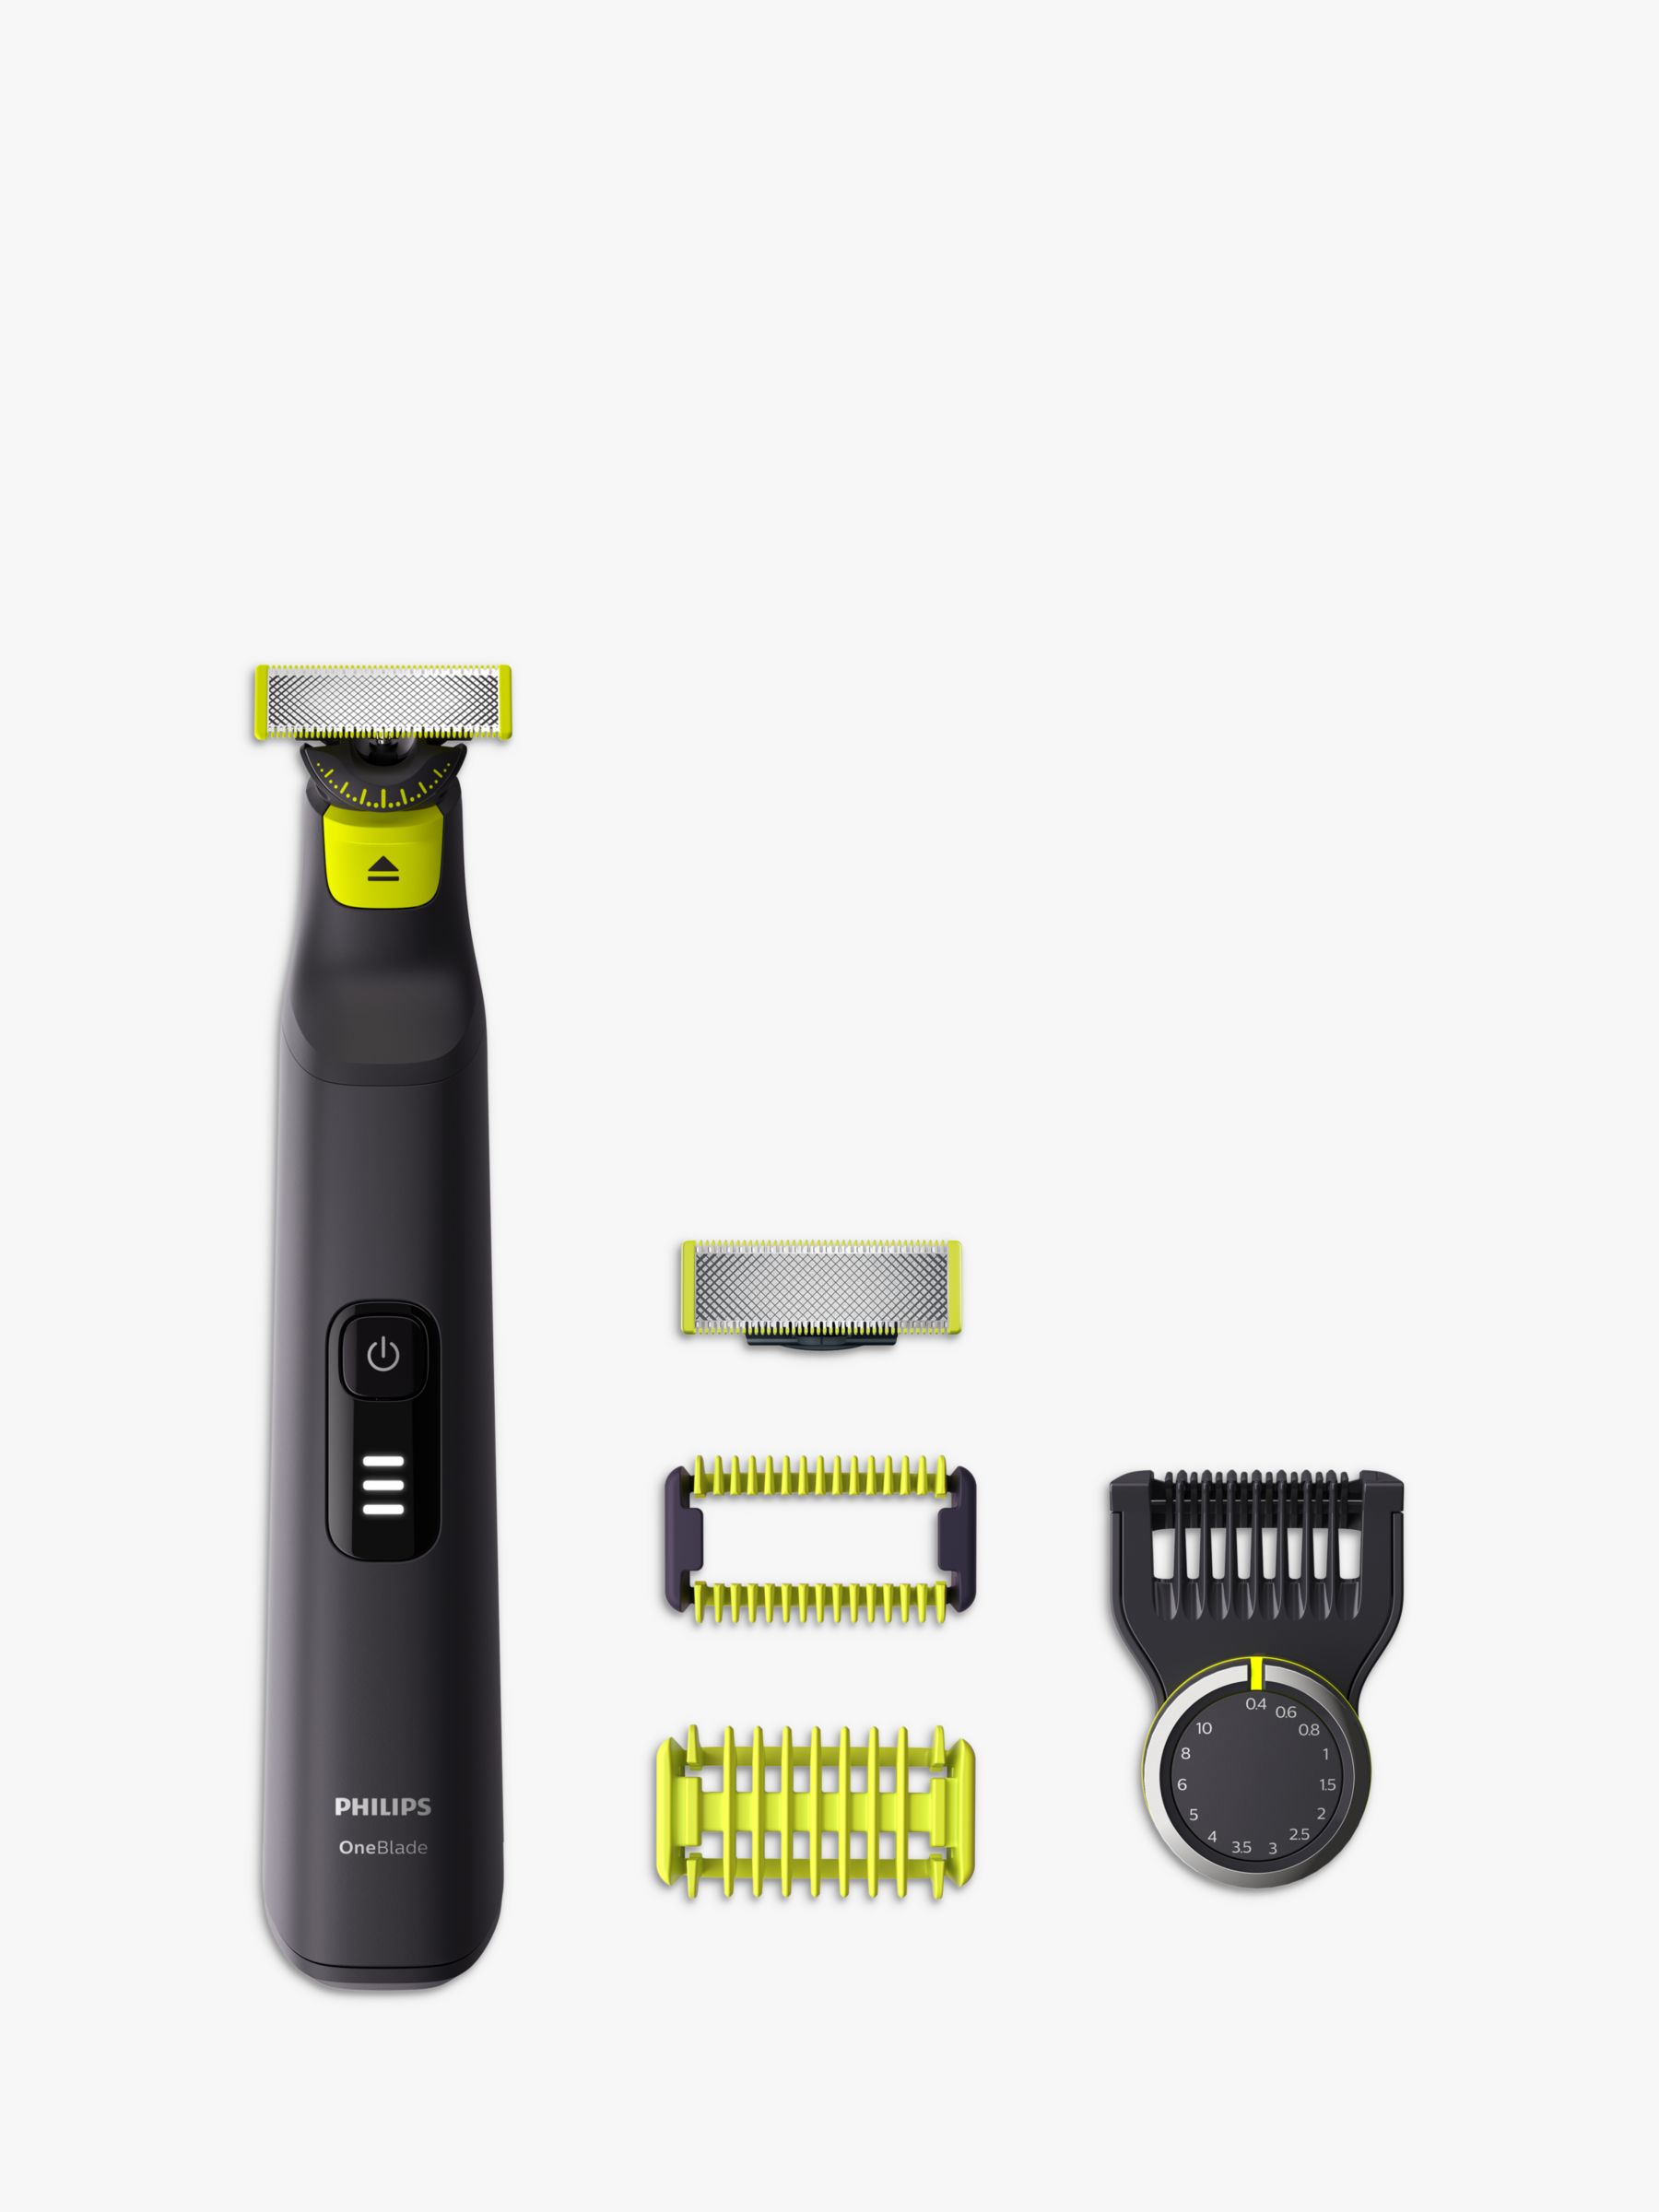 Philips OneBlade 360 Hair Shaver Trimmer Razor Comb 5-in-1 for Men